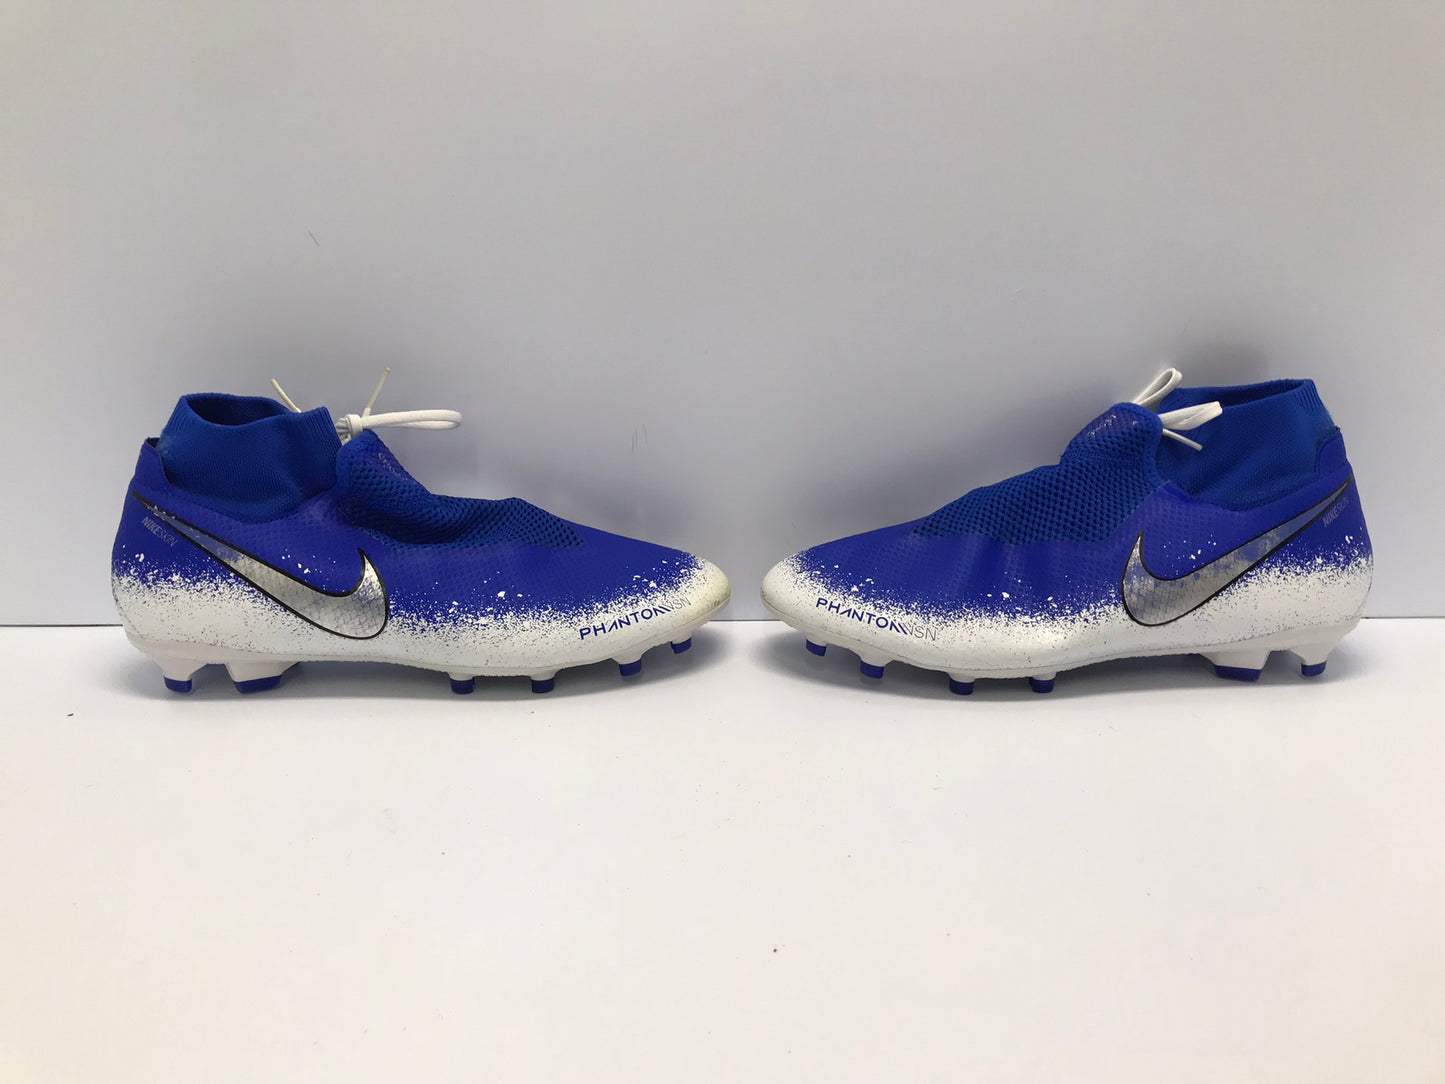 Soccer Shoes Cleats Men's Size 11 Nike Phantom Elite Blue Silver Grey Excellent